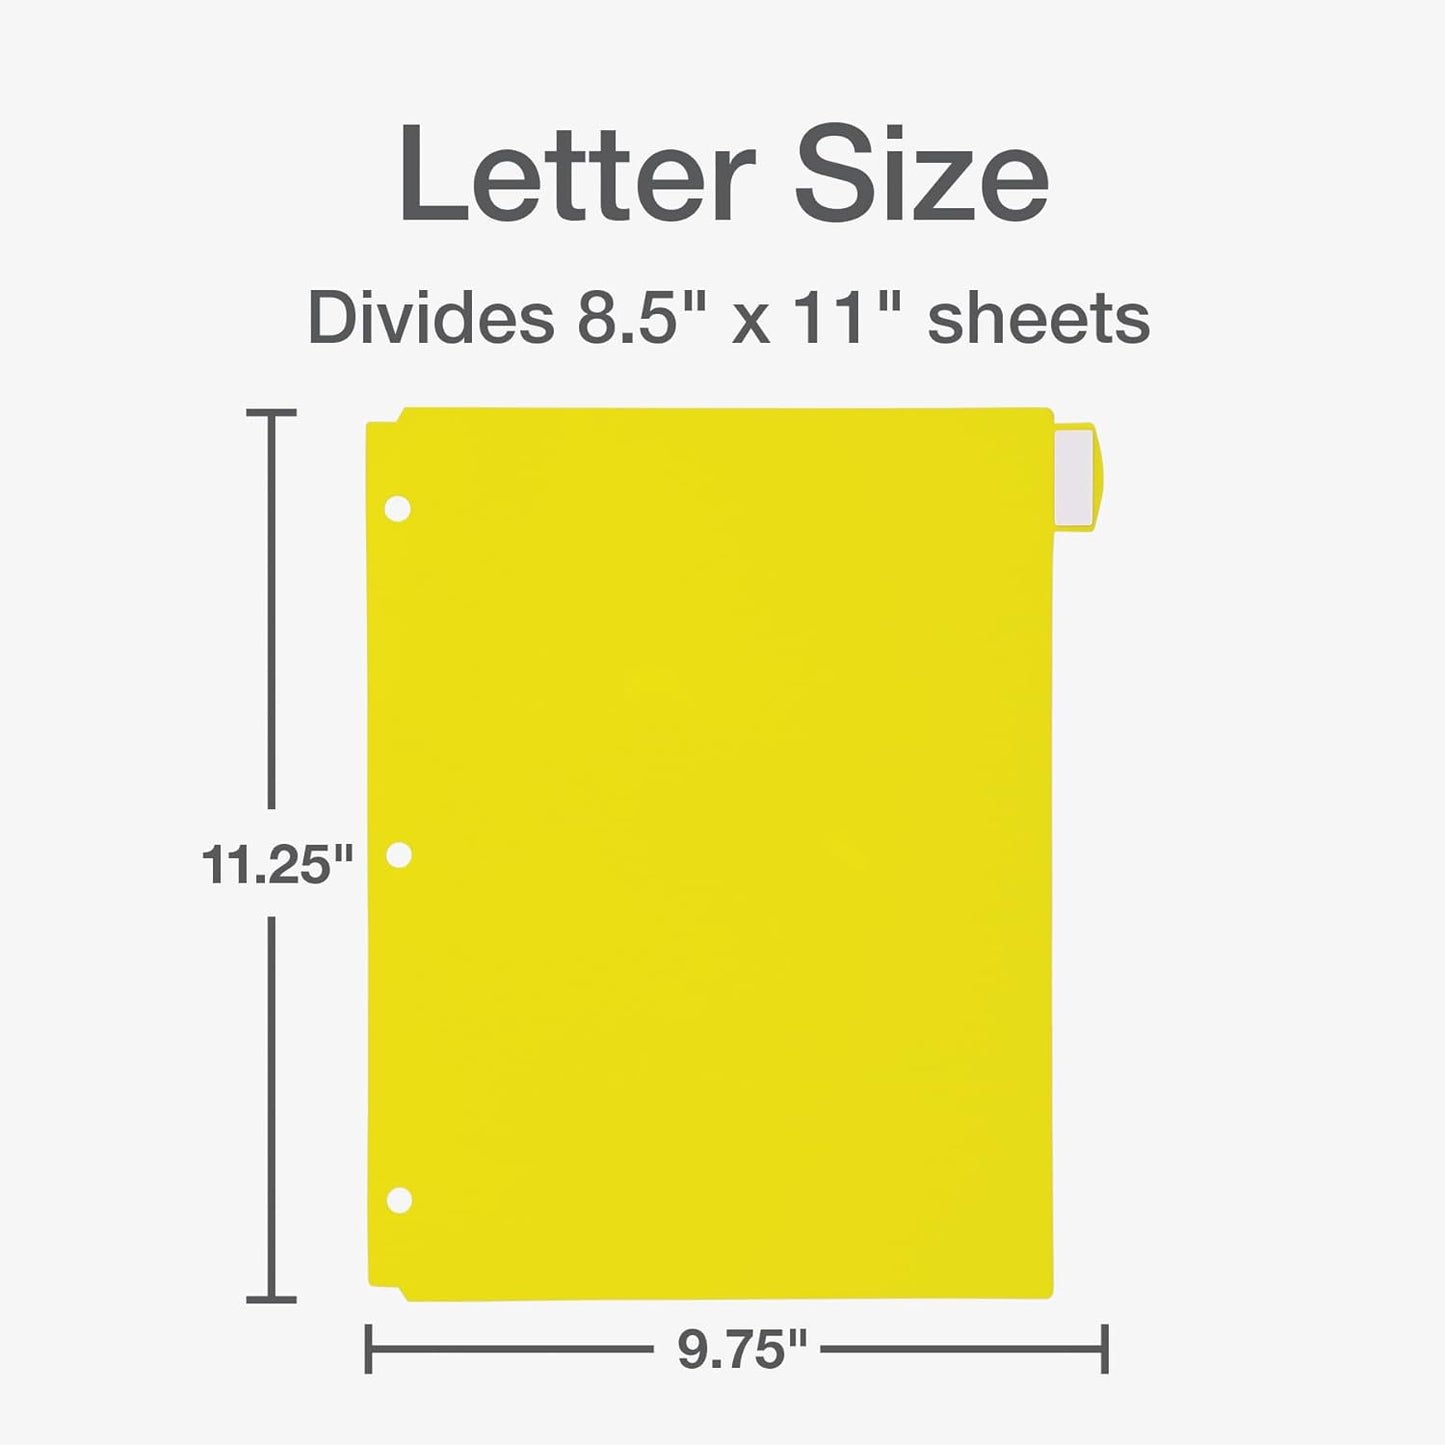 Plastic Binder Dividers for 3 Ring Binder, 8 Tab, Multicolor Tabs, 3 Hole Punched, Letter Size, 6 Sets (89601)